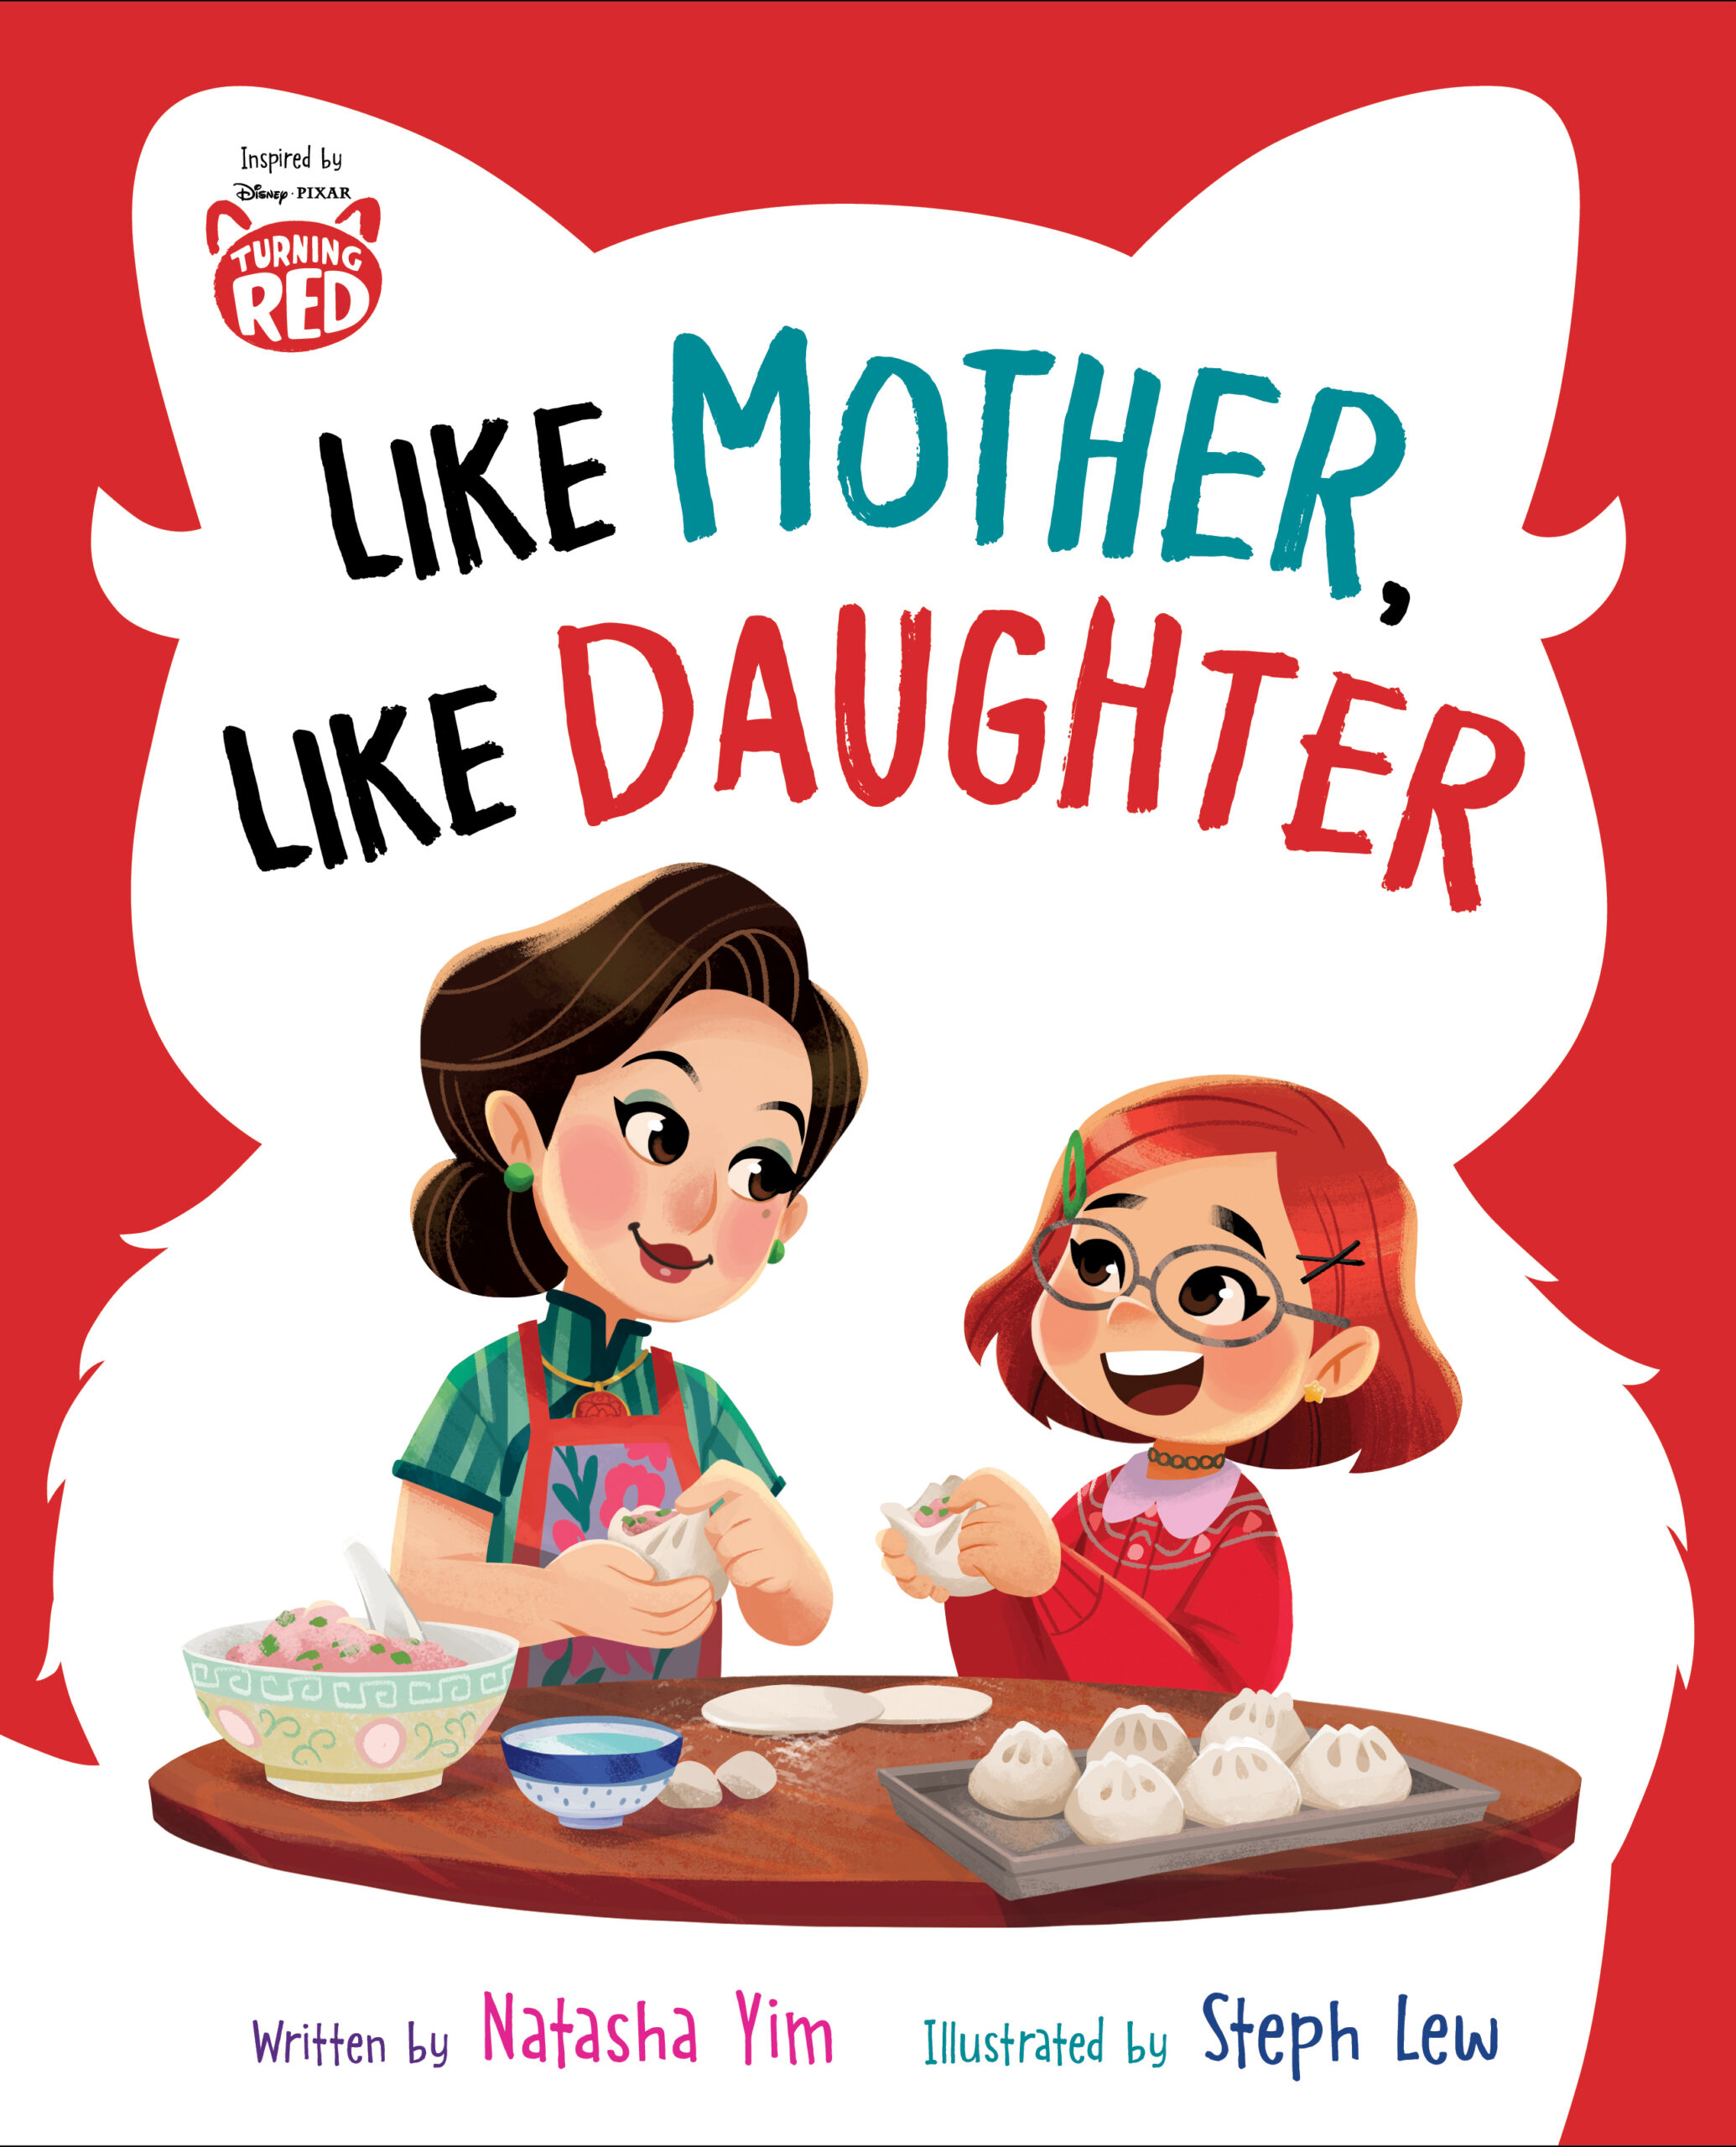 Disney/Pixar Turning Red: Like Mother, Like Daughter by Natasha